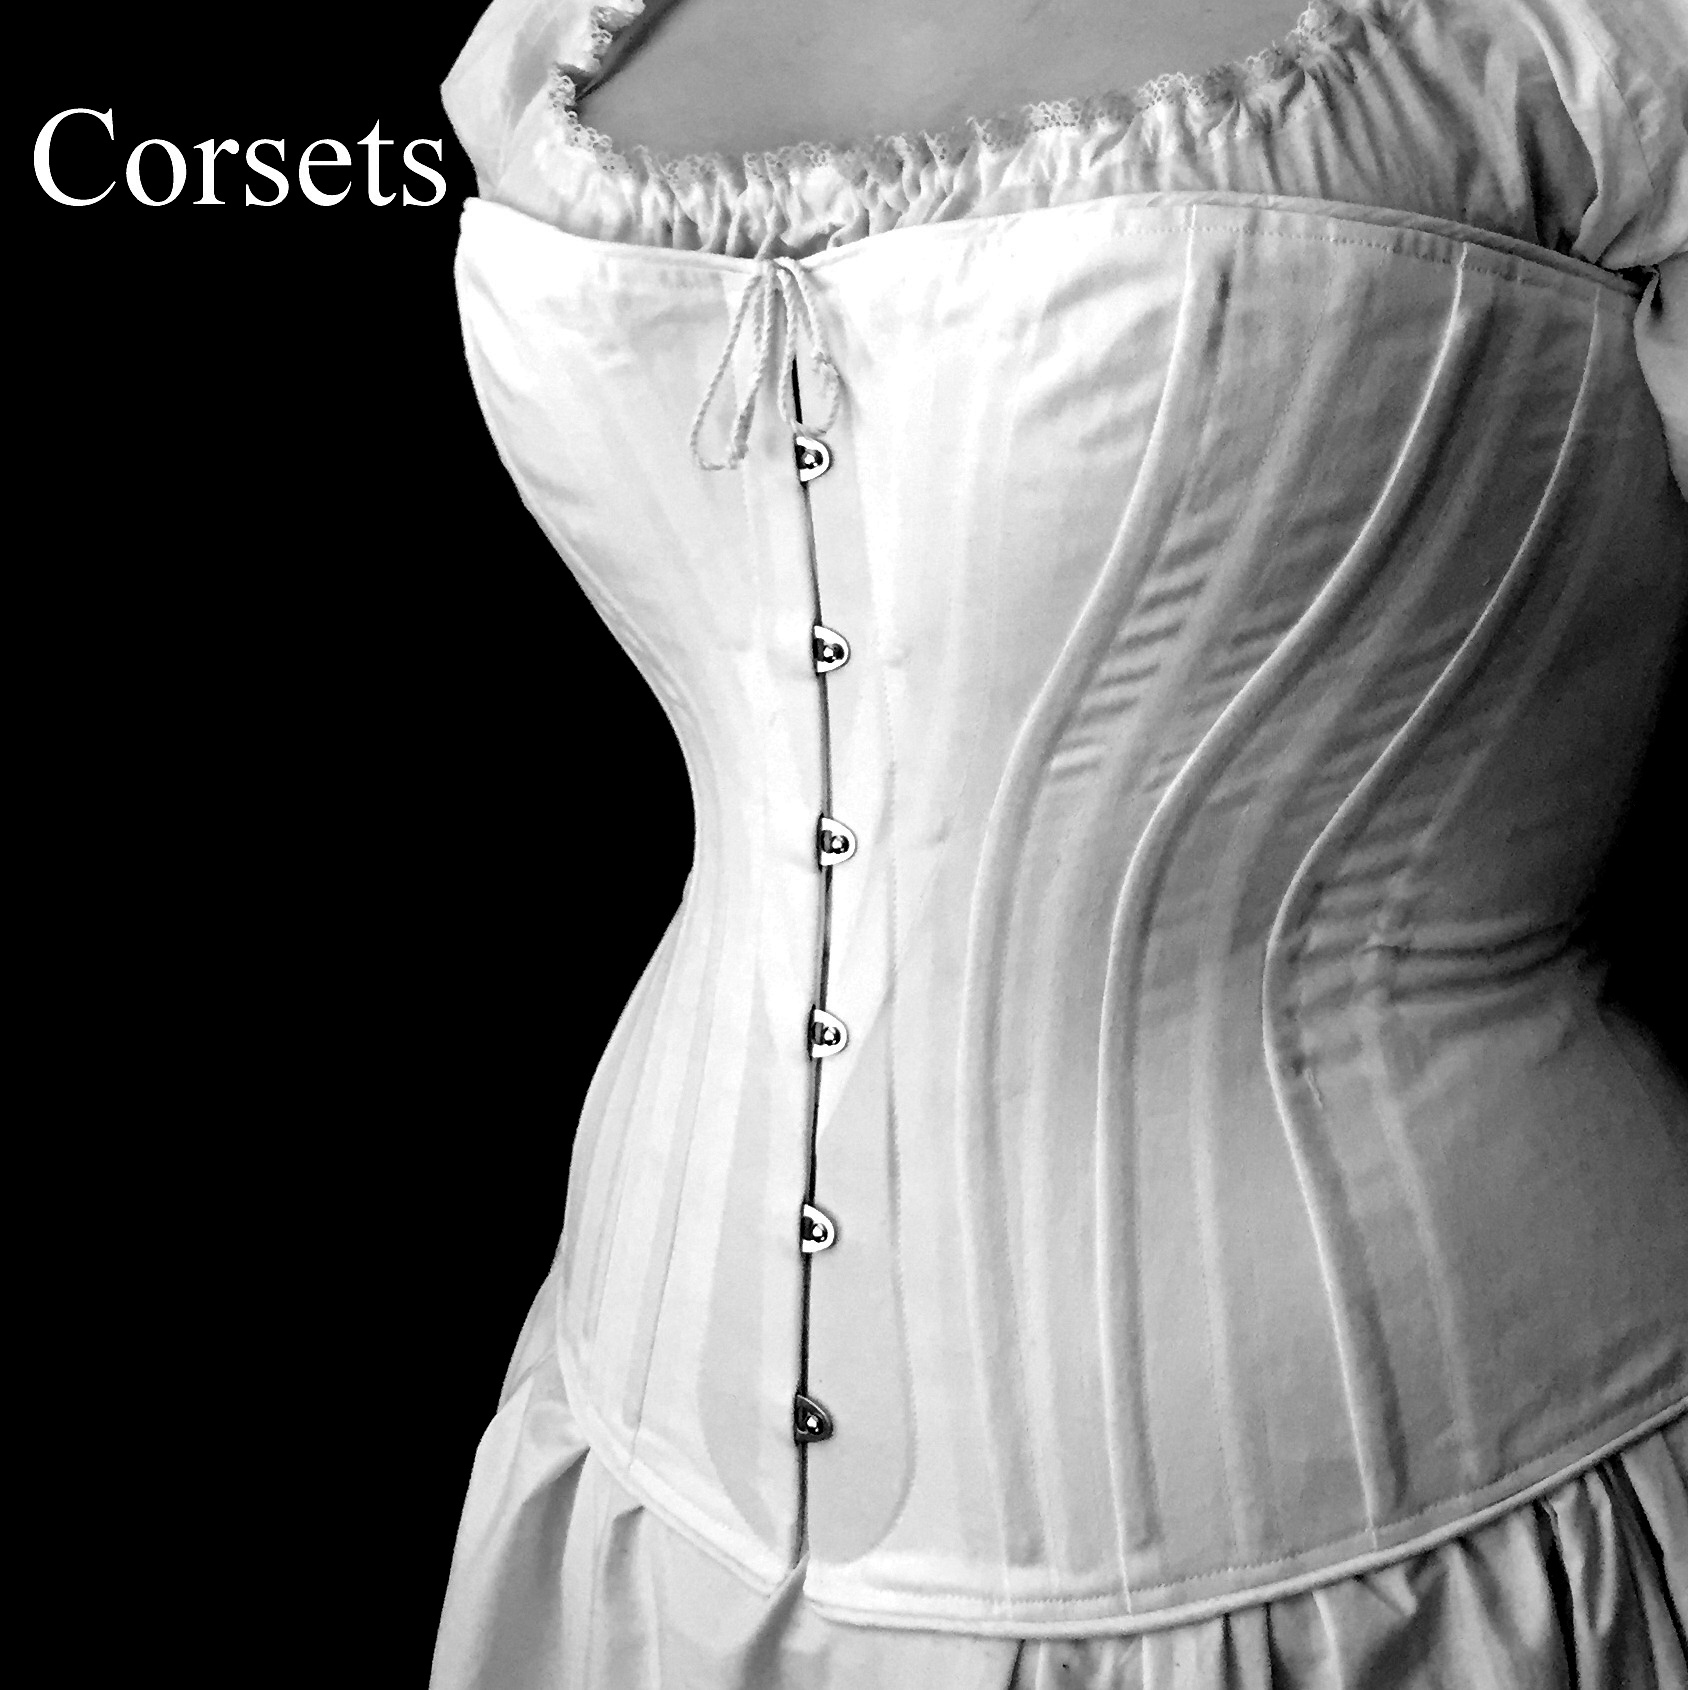 Period Corsets corsets.jpg